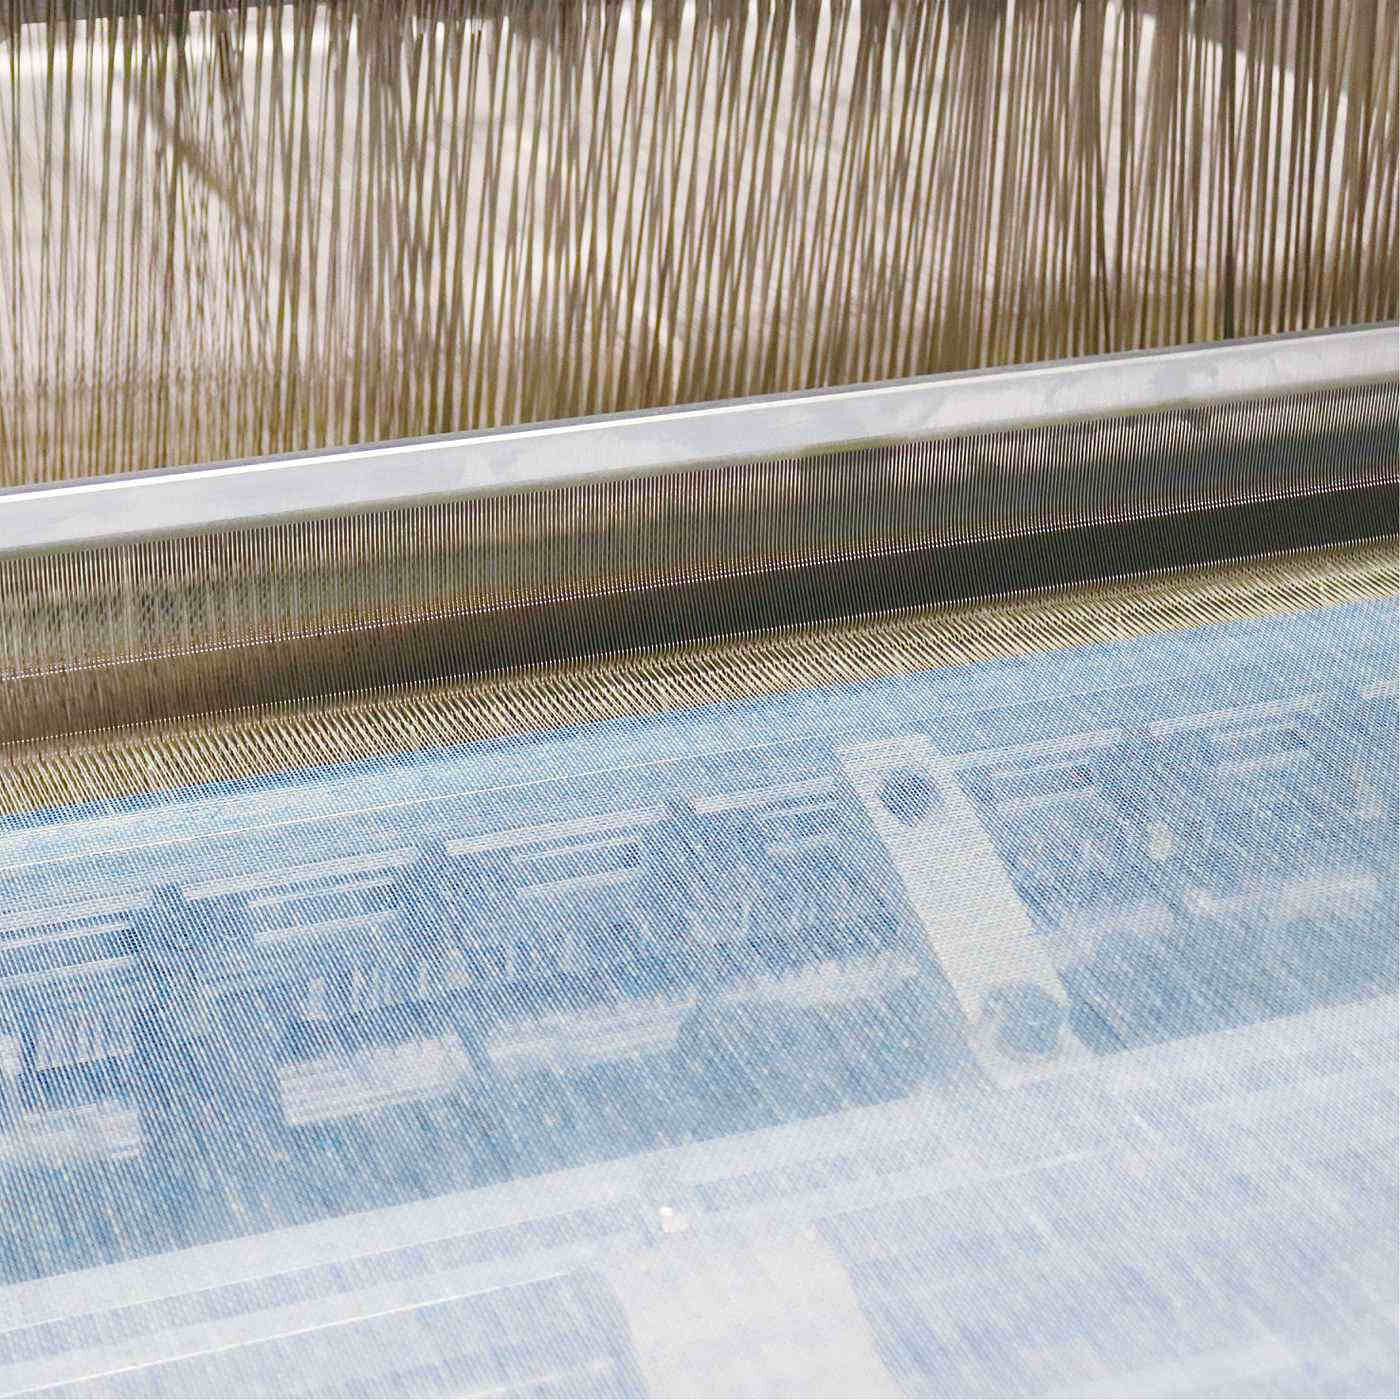 Real Stock|el:ment　奈良の笹田織物さんが織り上げる　軽やかでやわらかな着け心地　コットン1００％大判かや織りストール|100年以上かや織りの製造を続けている笹田織物株式会社さんに織っていただきました。その名のごとく古くから蚊帳に使われてきたかや織りは、目の粗い平織りゆえの通気性のよさが特徴です。